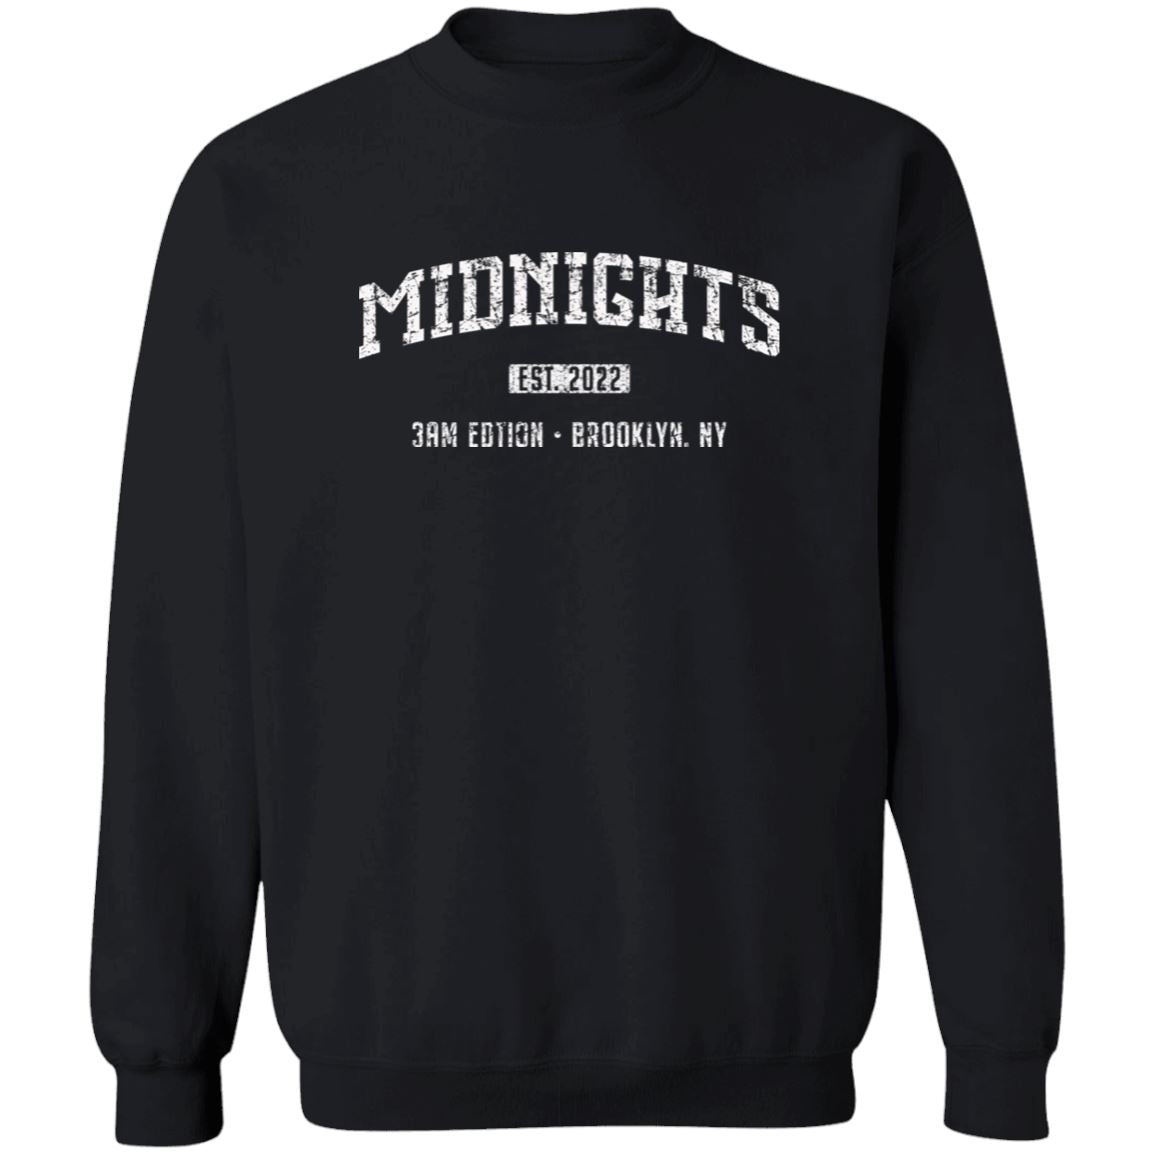 Midnights _Custom Cat Stock Items Sweatshirts CustomCat Black S 